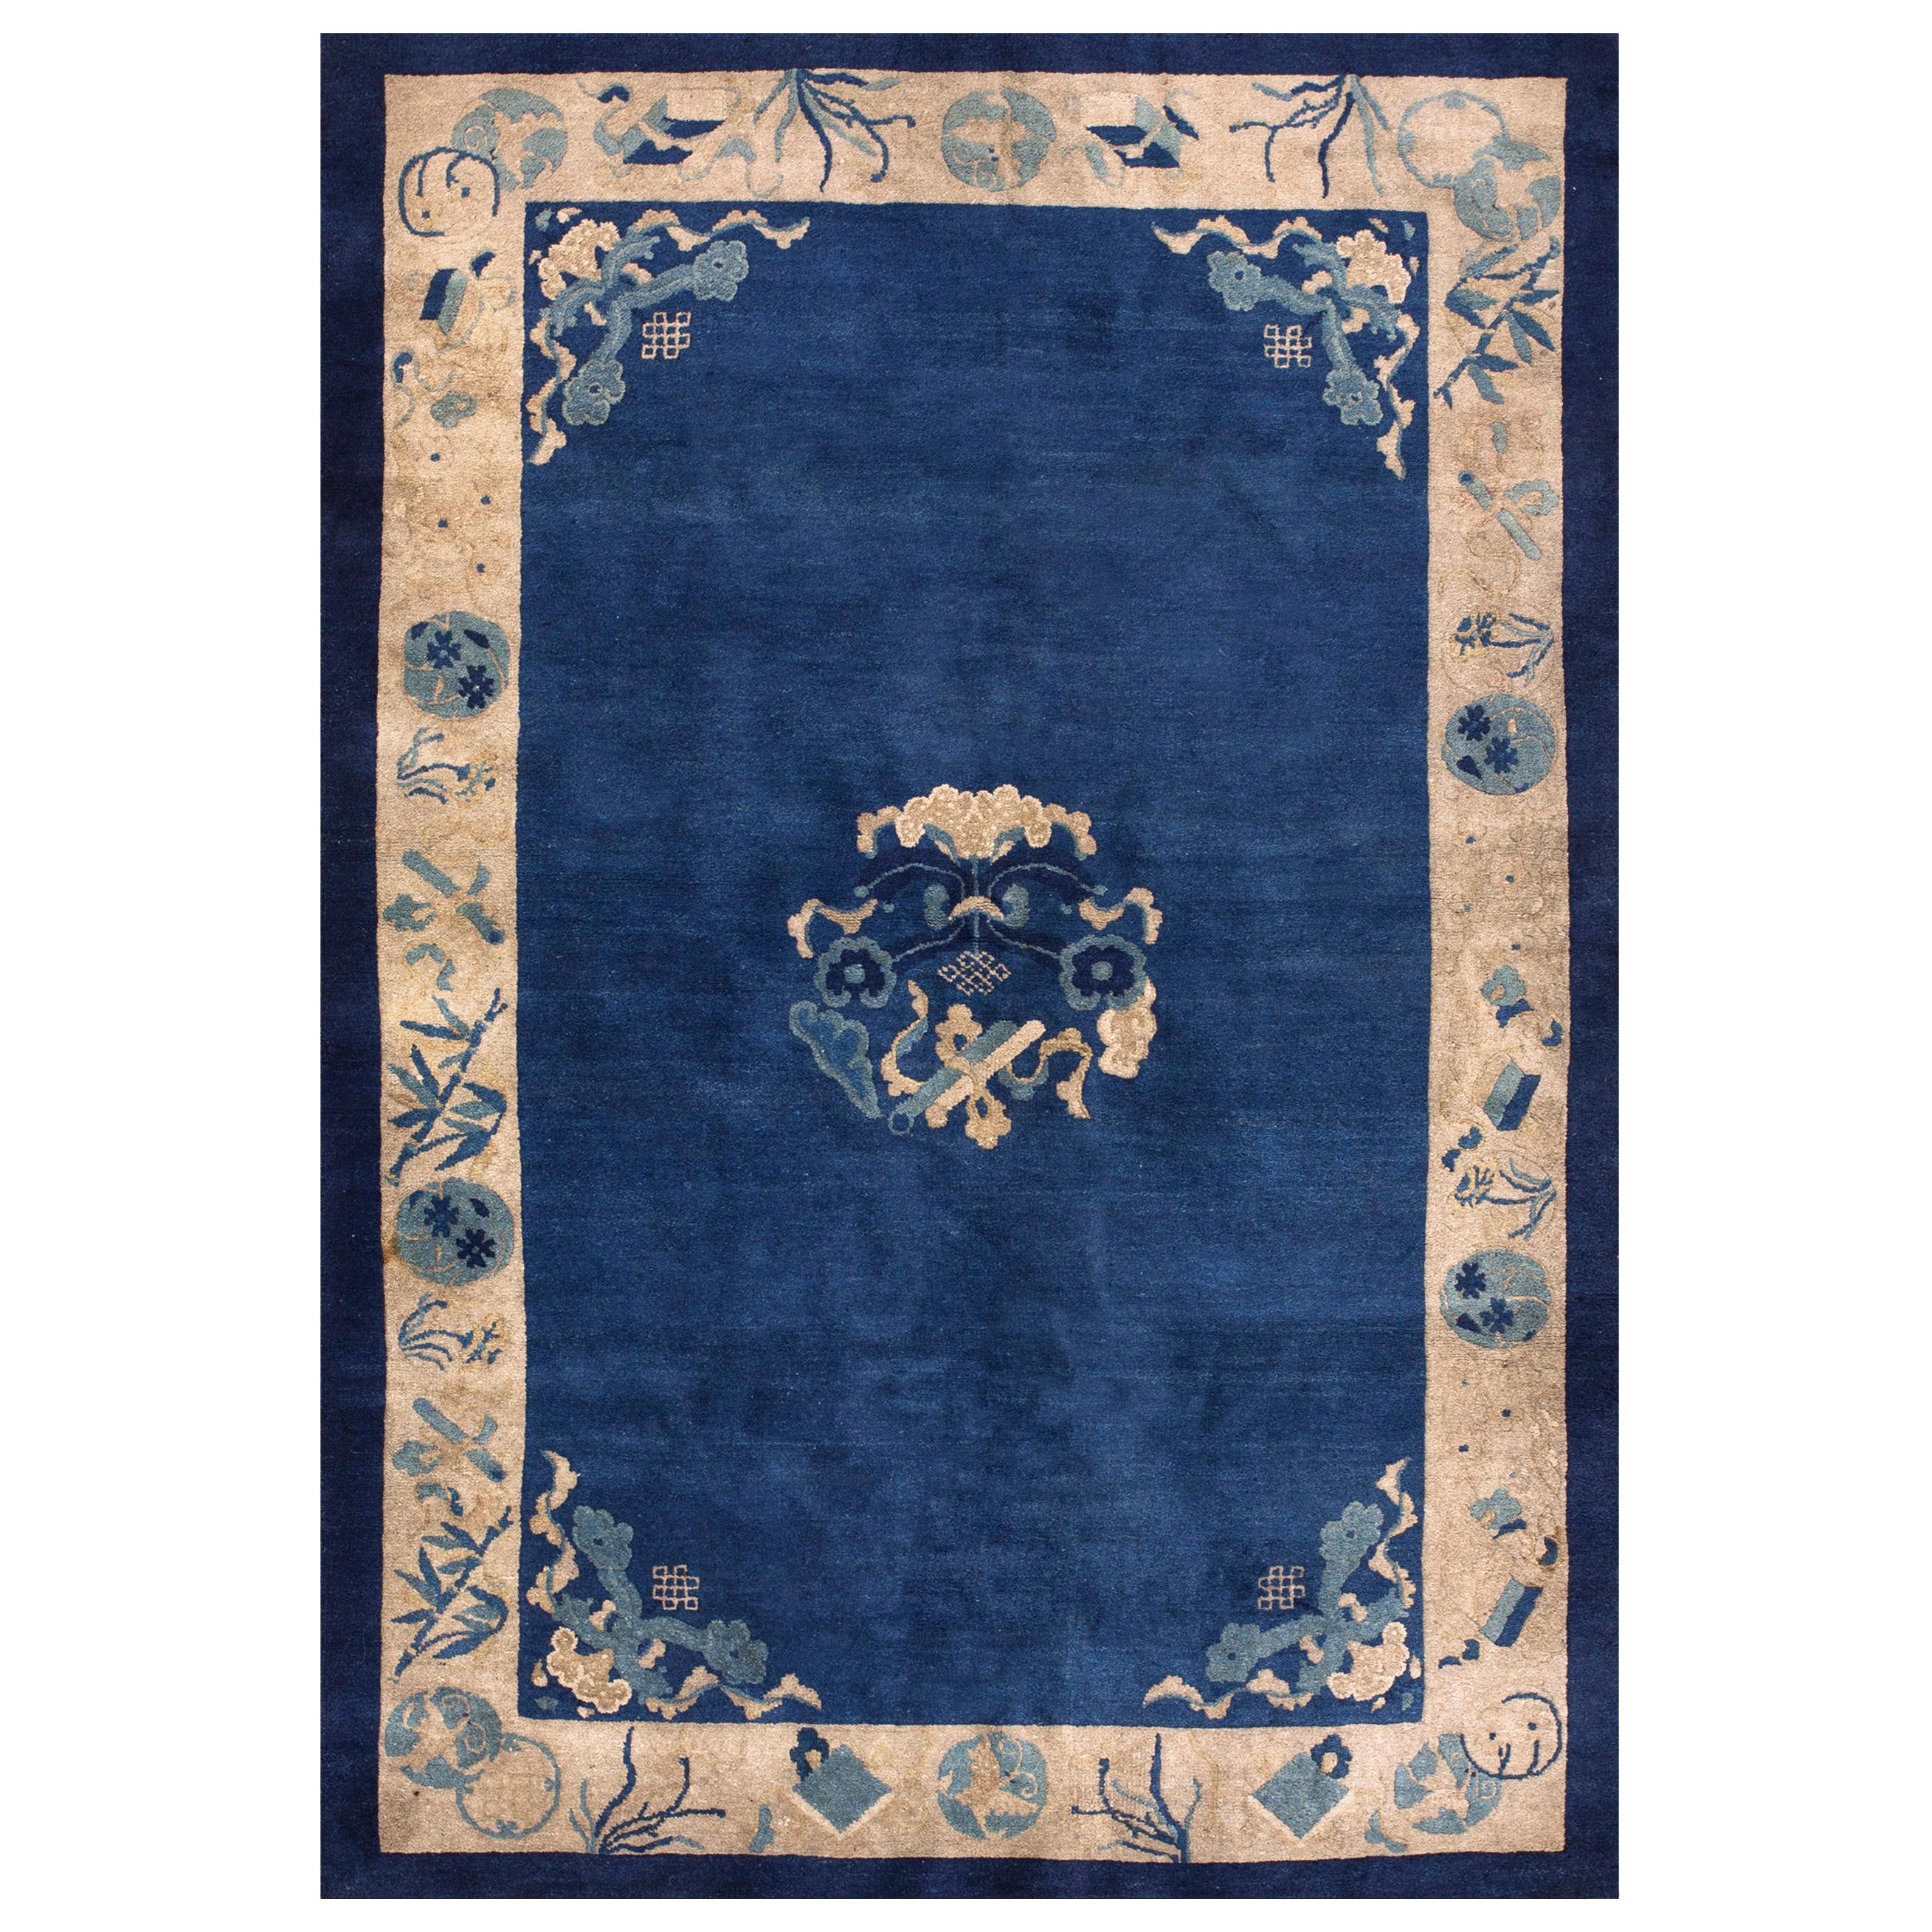 Early 20th Century Chinese Peking Carpet ( 4'2" x 6'2" - 127 x 188 )